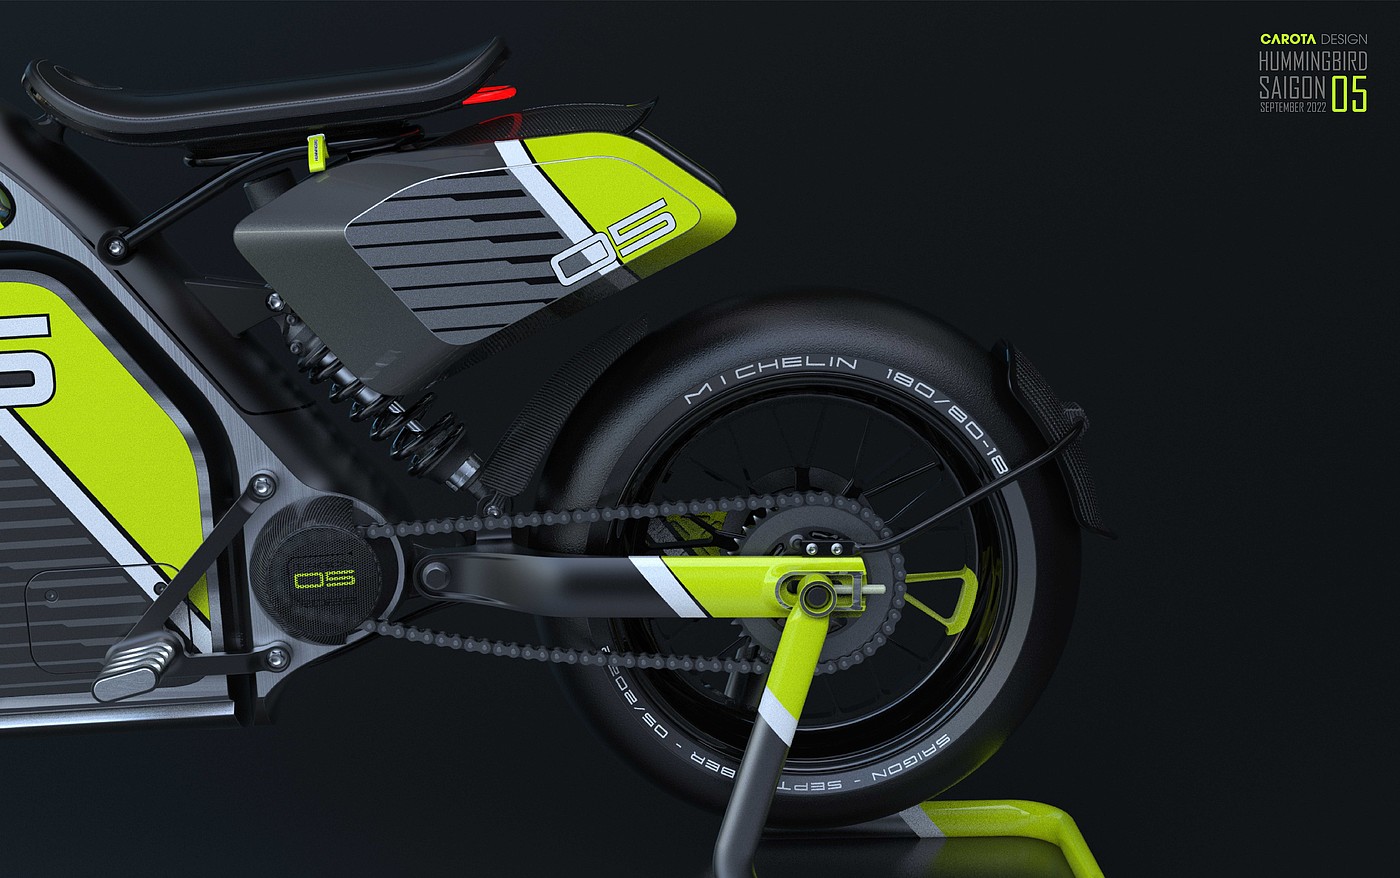 electric vehicle，Automotive design，Electric Scooter，escooter，电动摩托车，电动摩托车设计，汽车设计，两轮电动车，